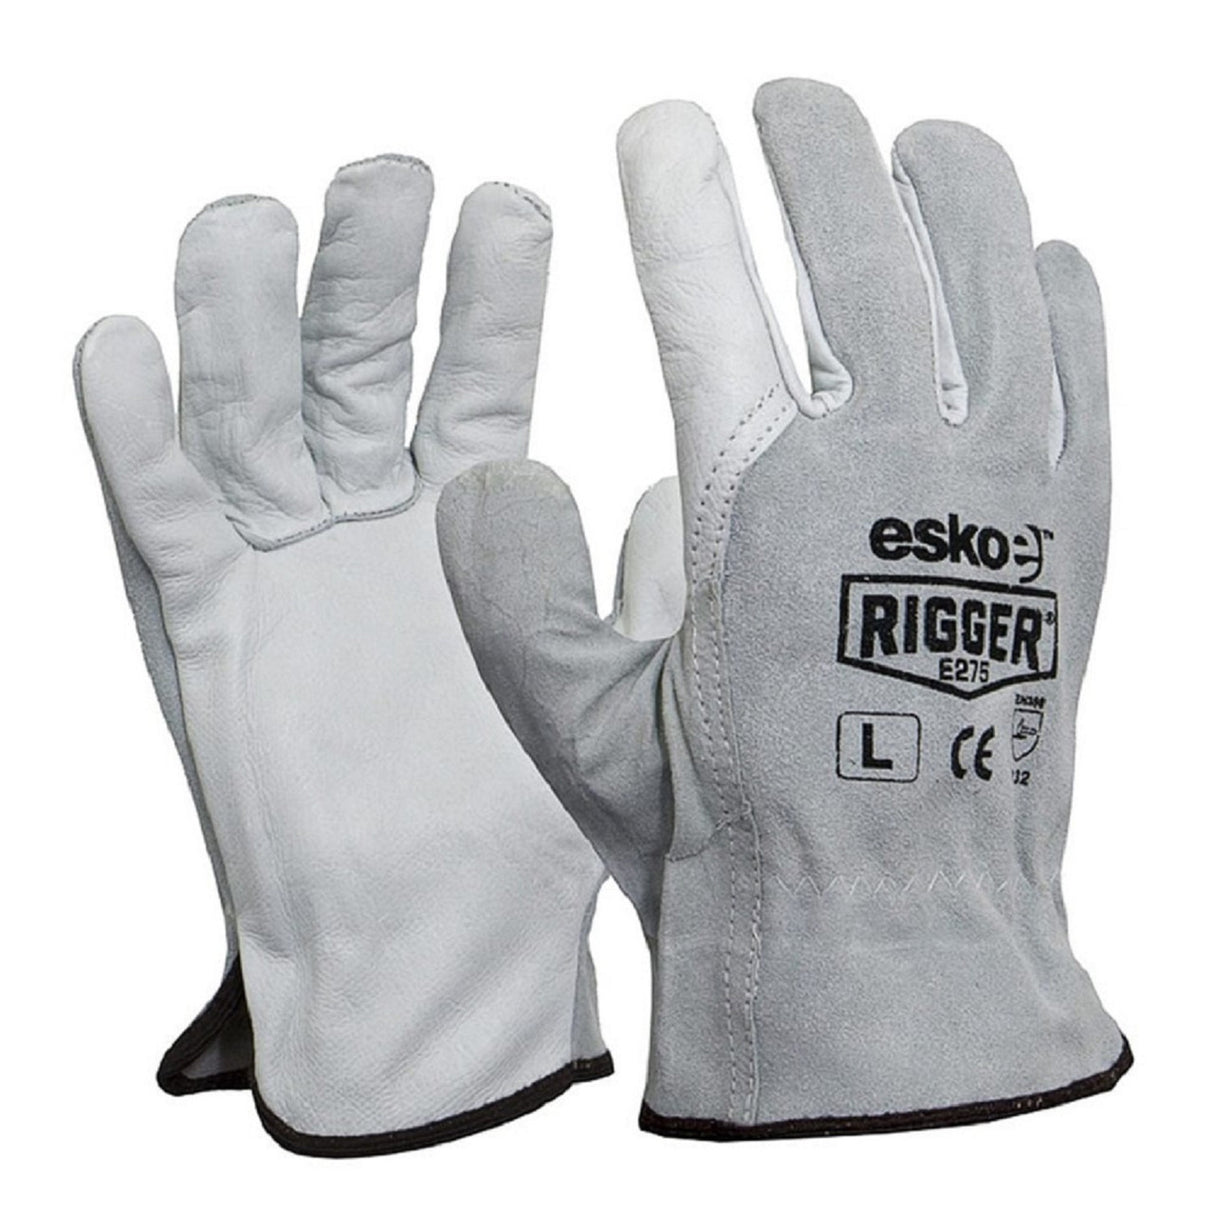 The Rigger Premium Split Leather Gloves